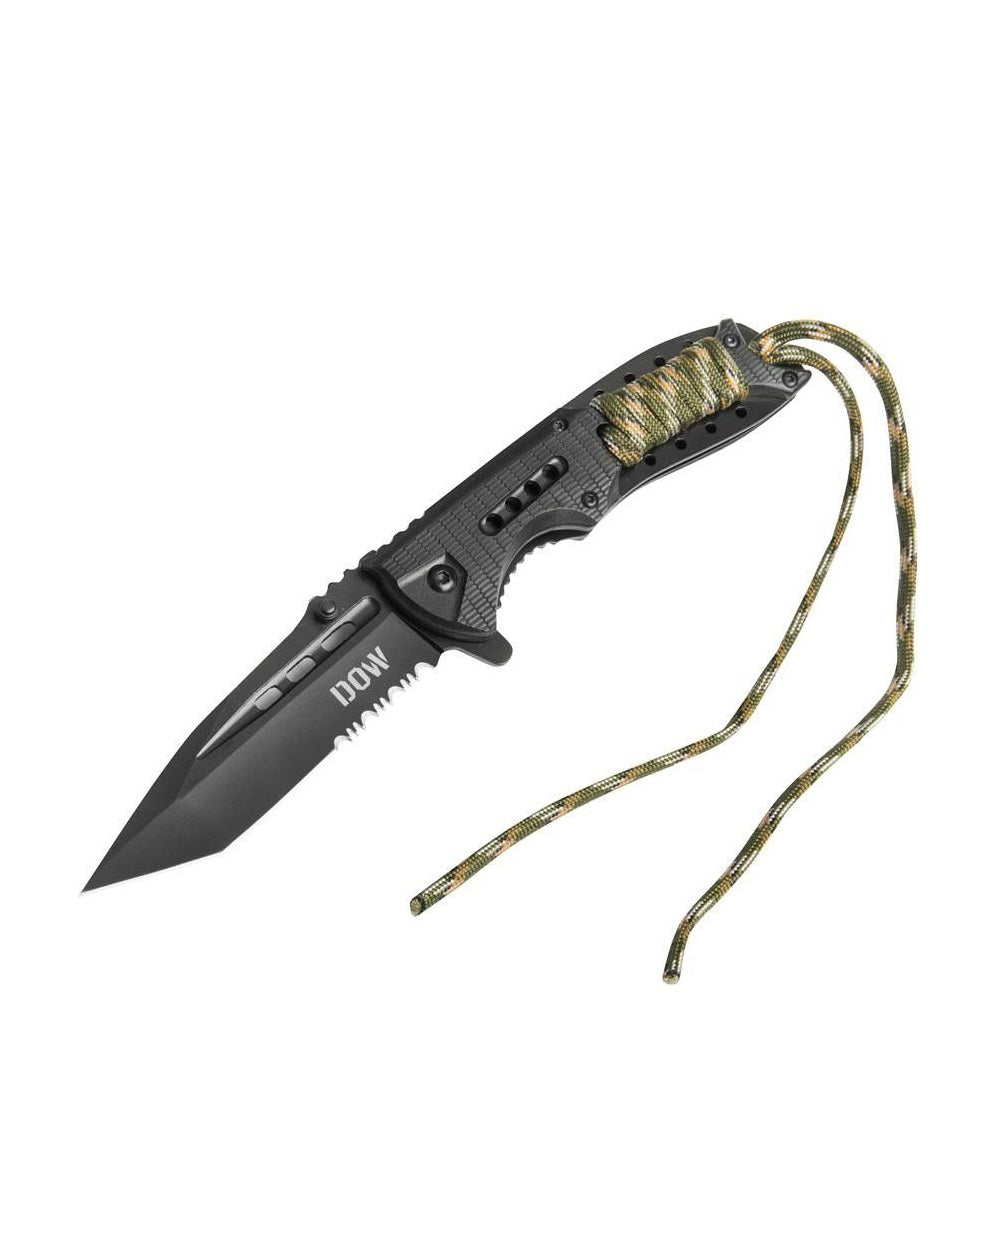 Tanto Gator Knife -4inch (10cm) Blade